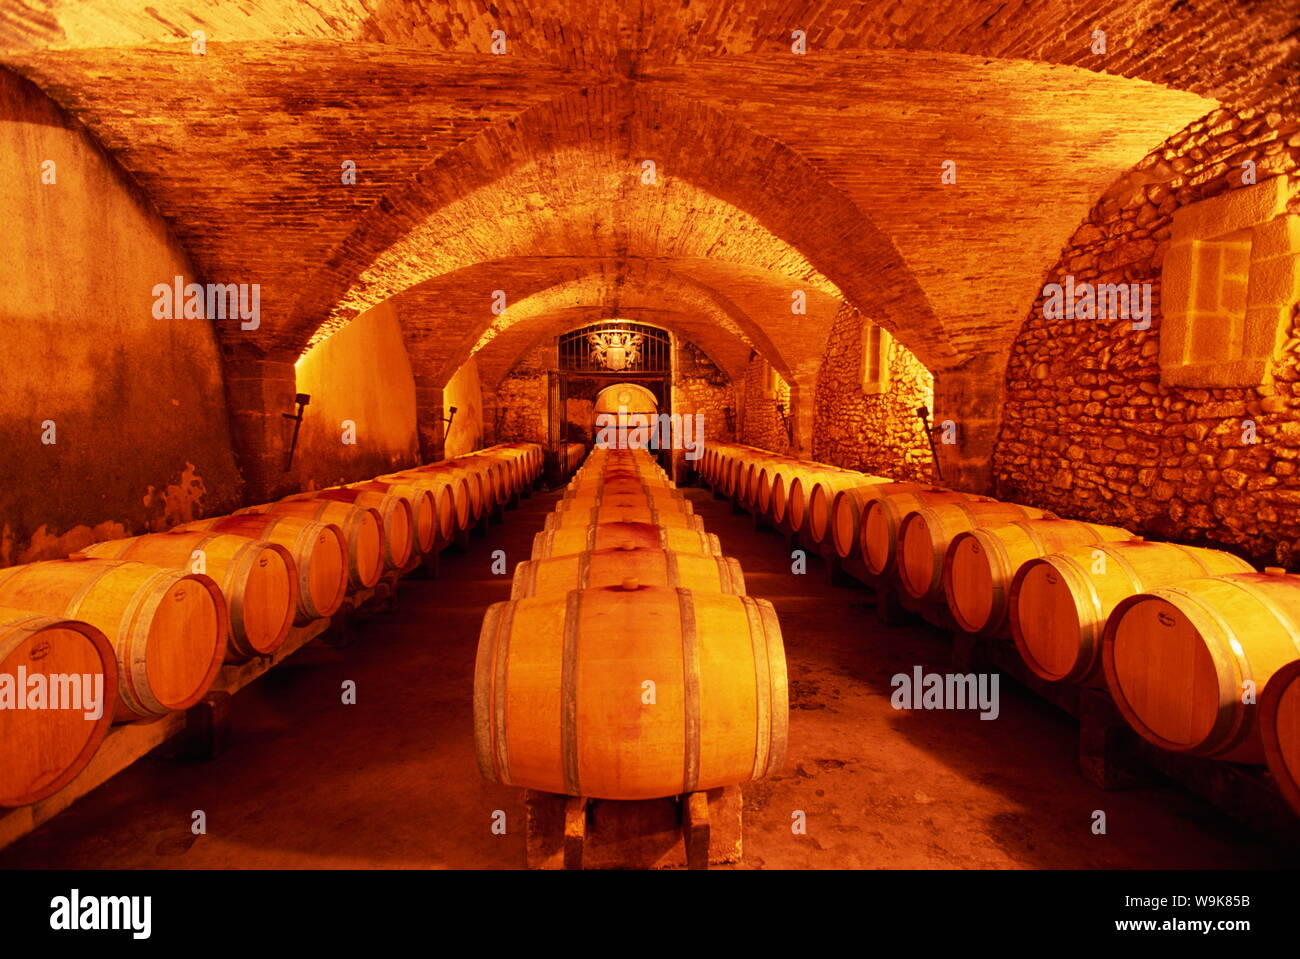 Barrels of wine, France, Europe Stock Photo